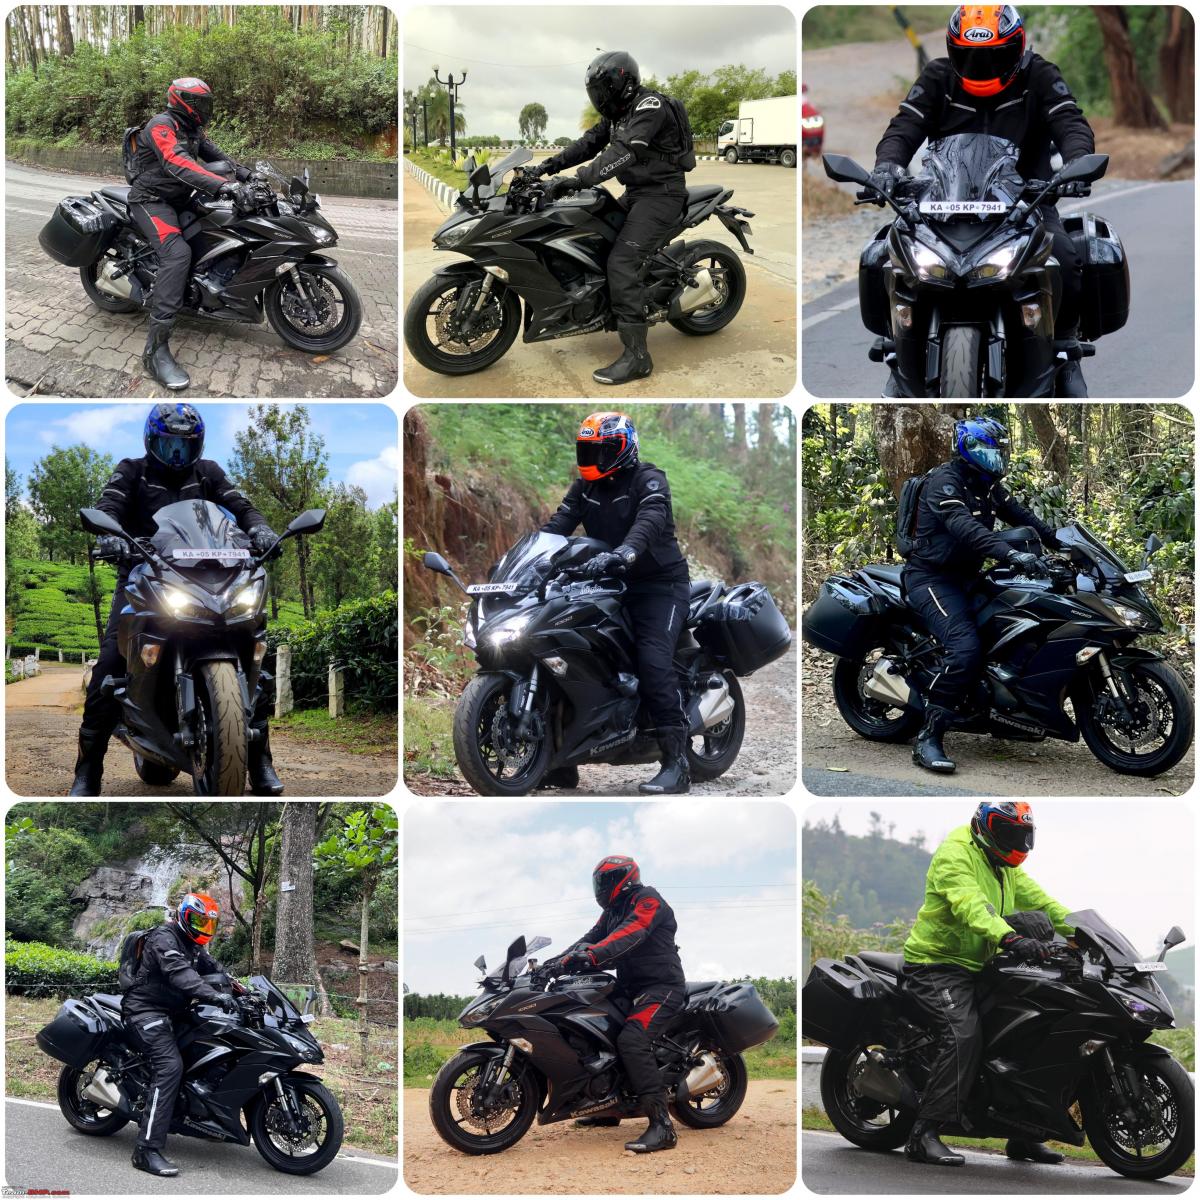 Living with a superbike: 5 years of owning & maintaining a Ninja 1000, Indian, Member Content, Kawasaki Ninja 1000, Bike ownership